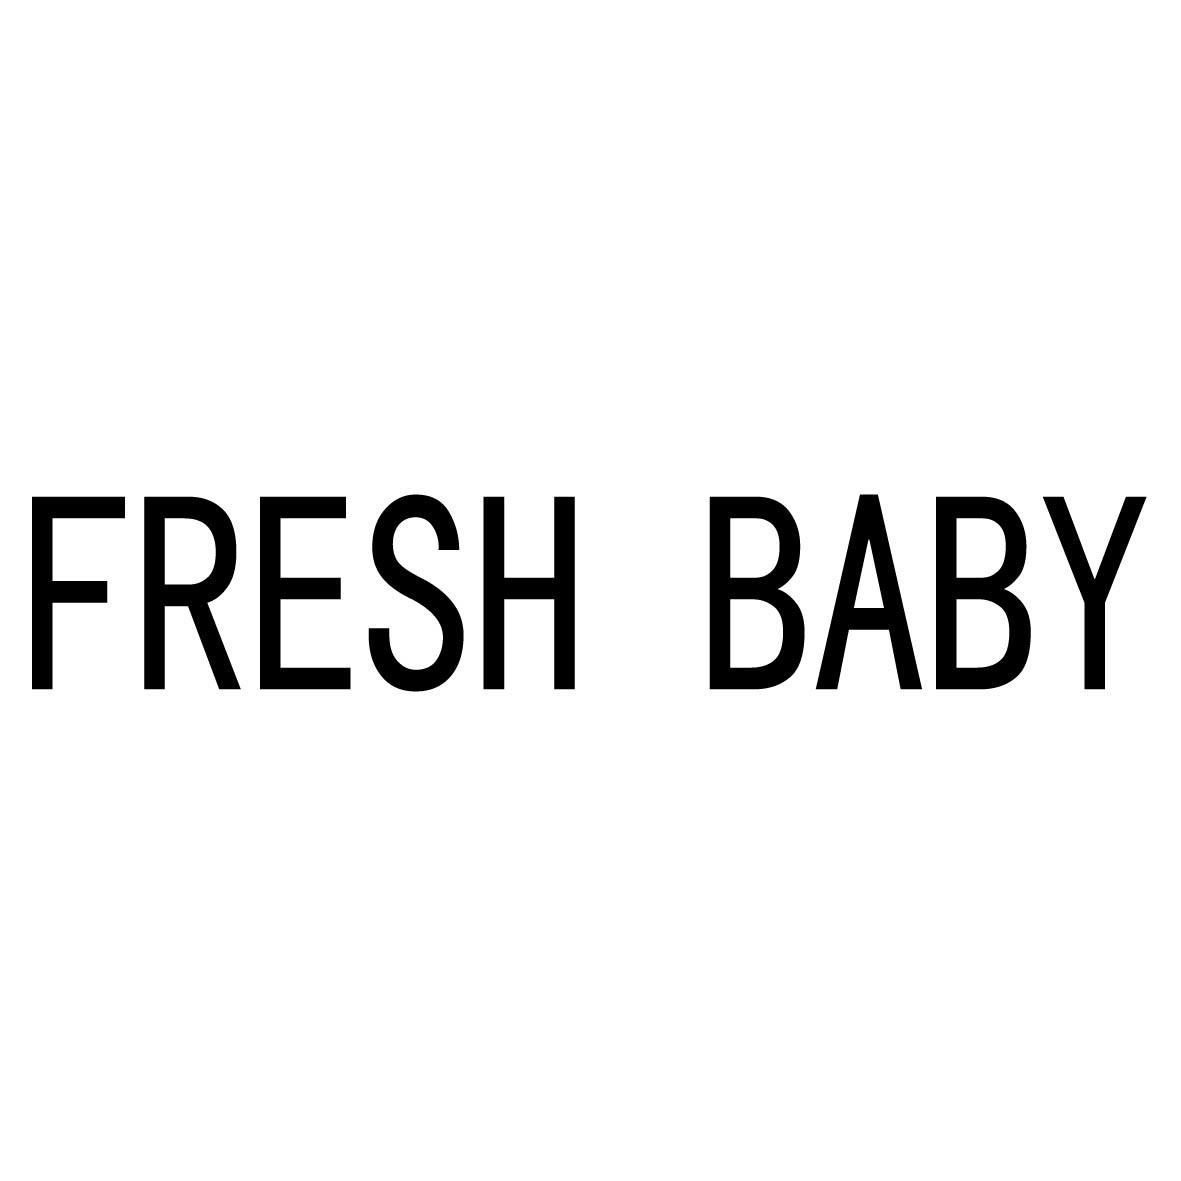 fresh baby申请被驳回不予受理等该商标已失效